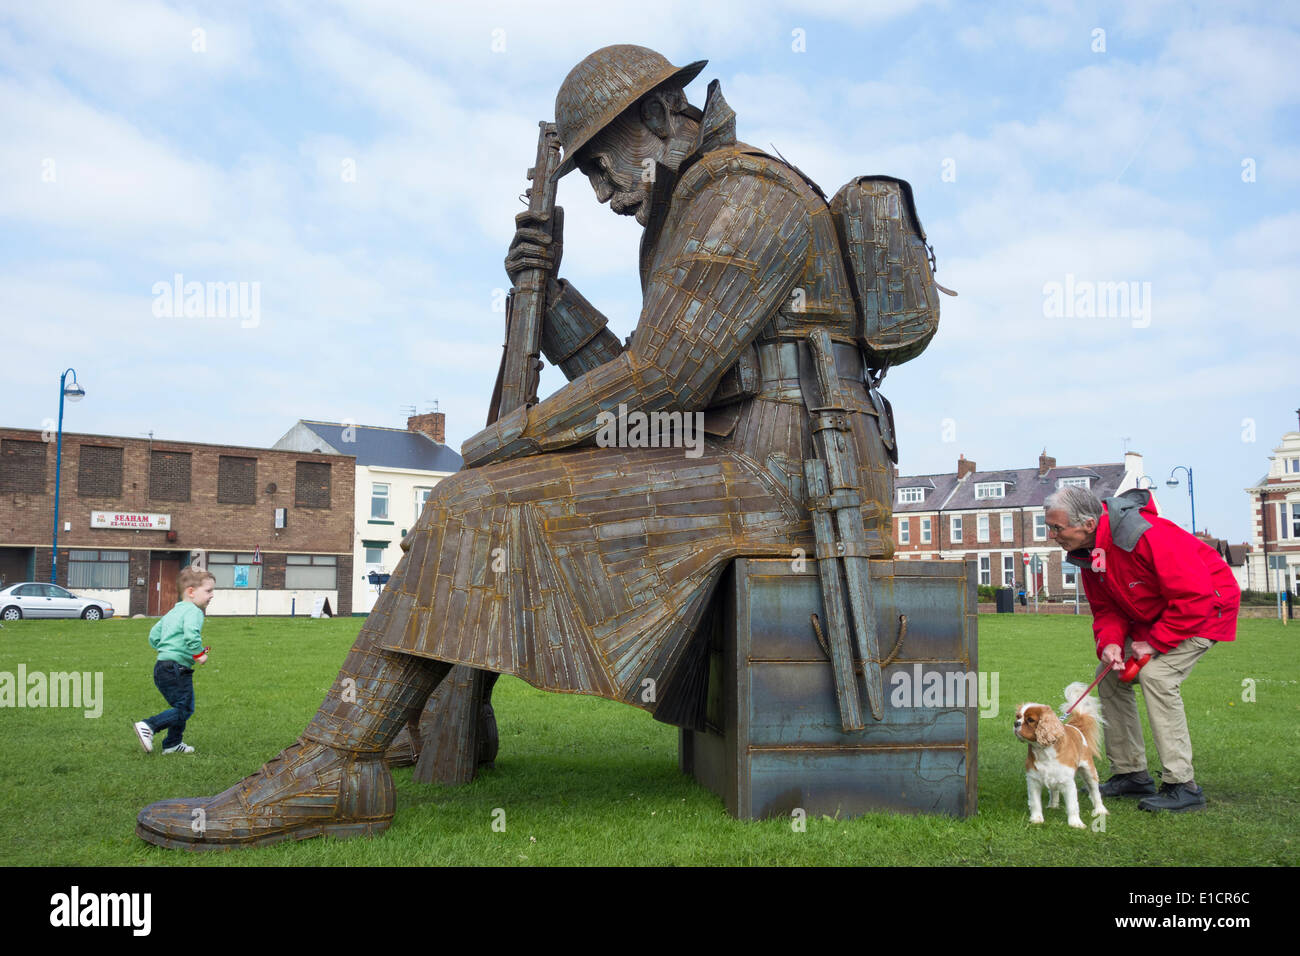 '1101'Steel sculpture soldat, Seaham, County Durham, England, UK Banque D'Images